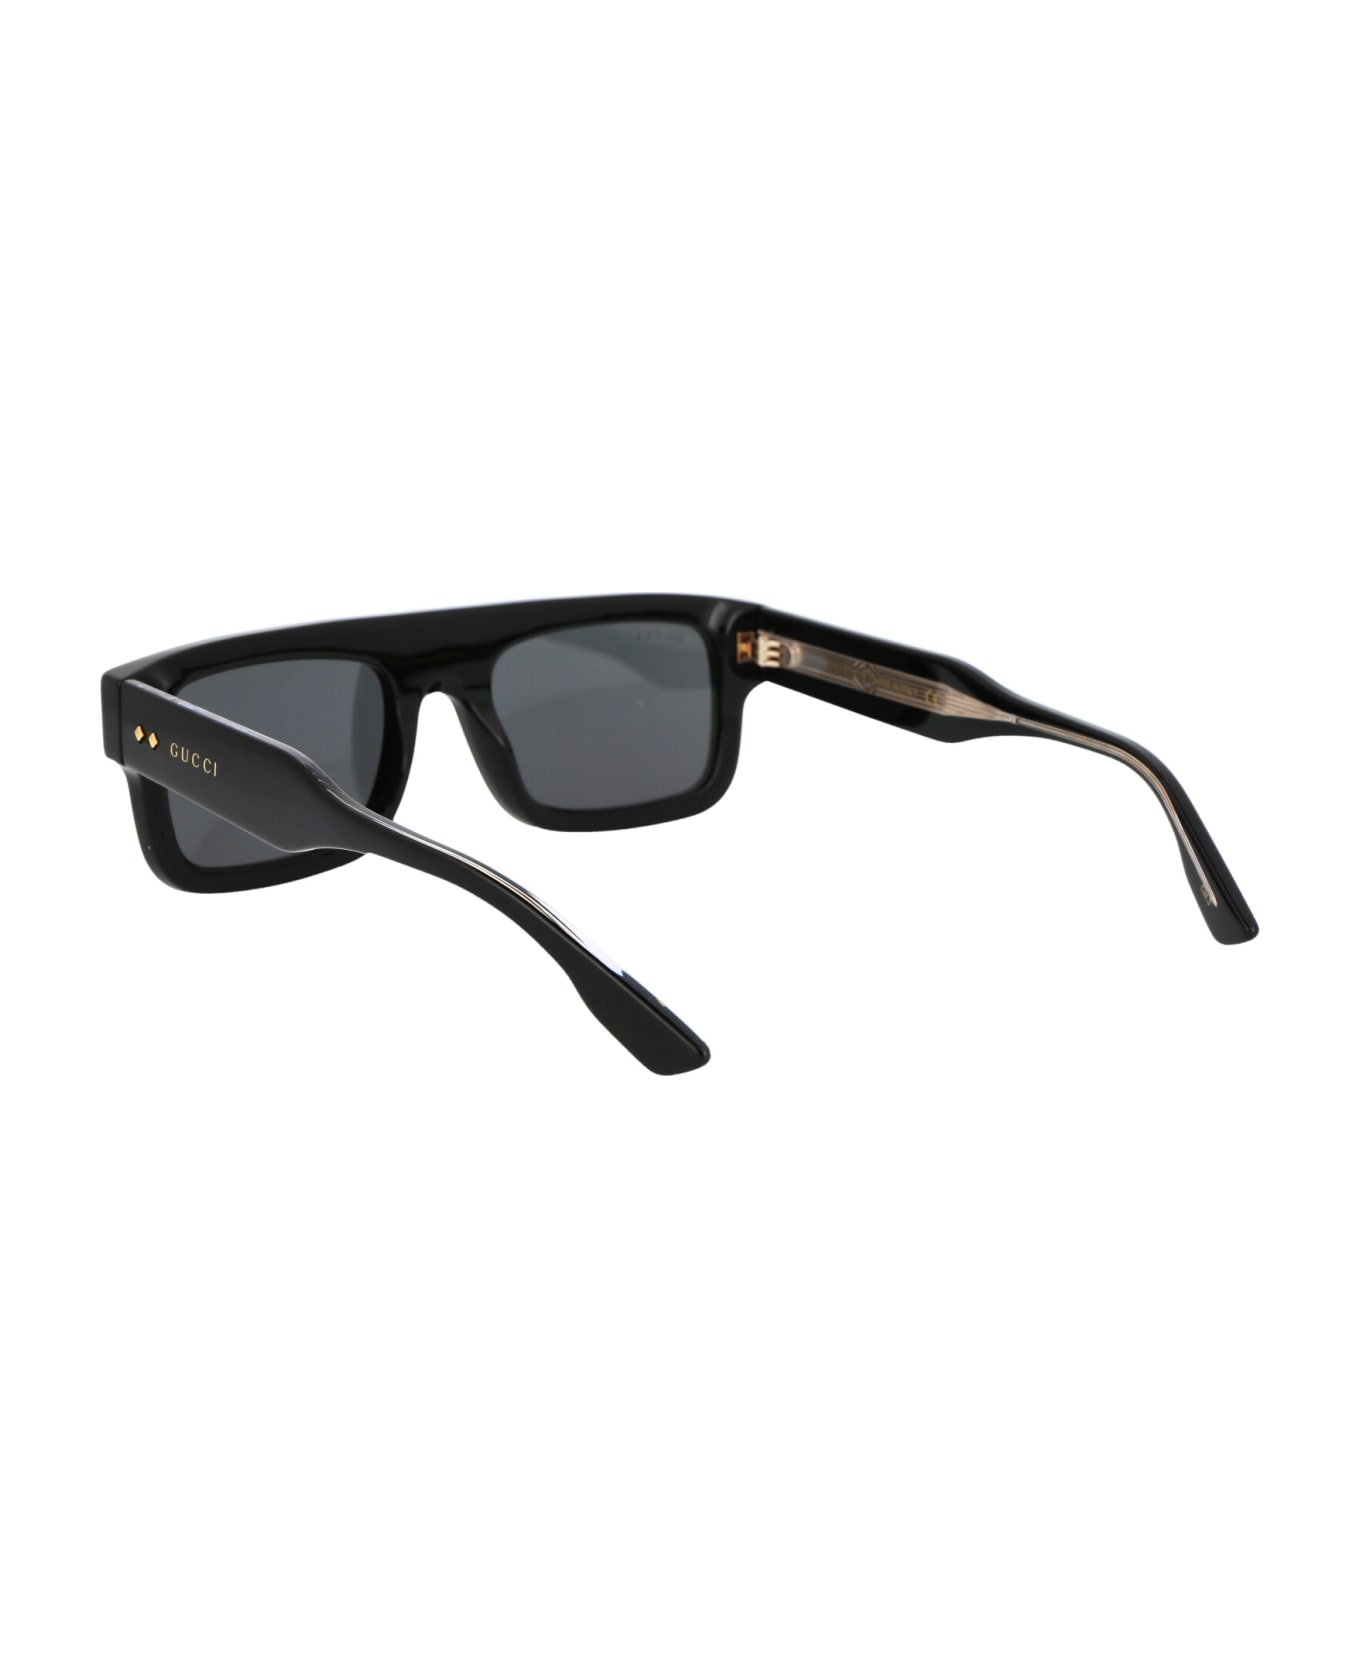 Gucci Eyewear Gg1085s Sunglasses - 001 BLACK BLACK GREY